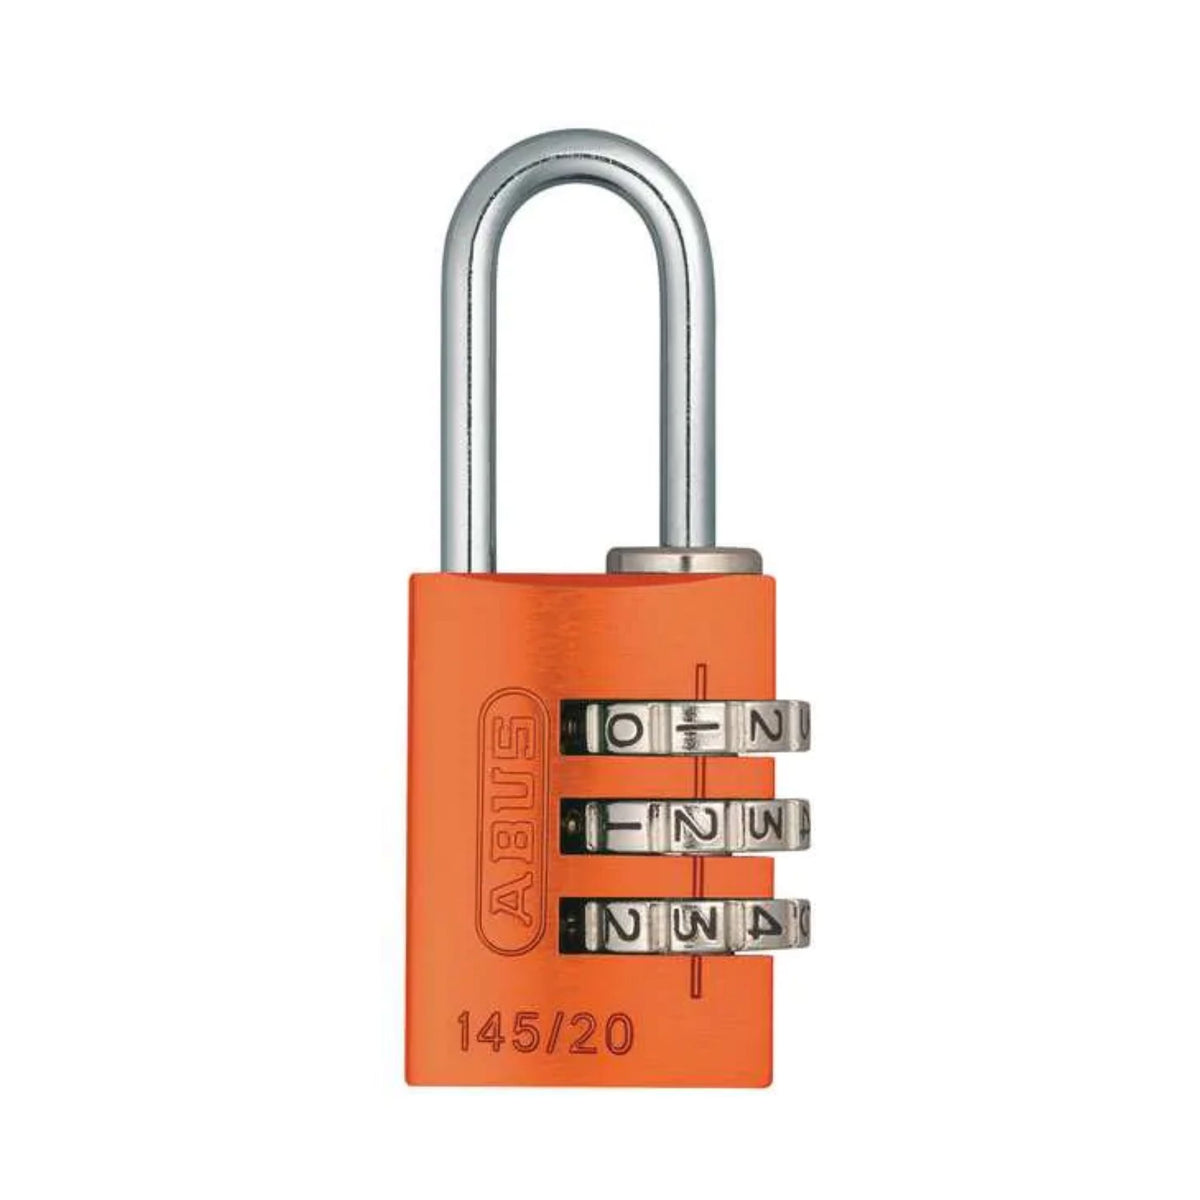 Abus 145/20 Orange Combination Luggage Padlock - The Lock Source